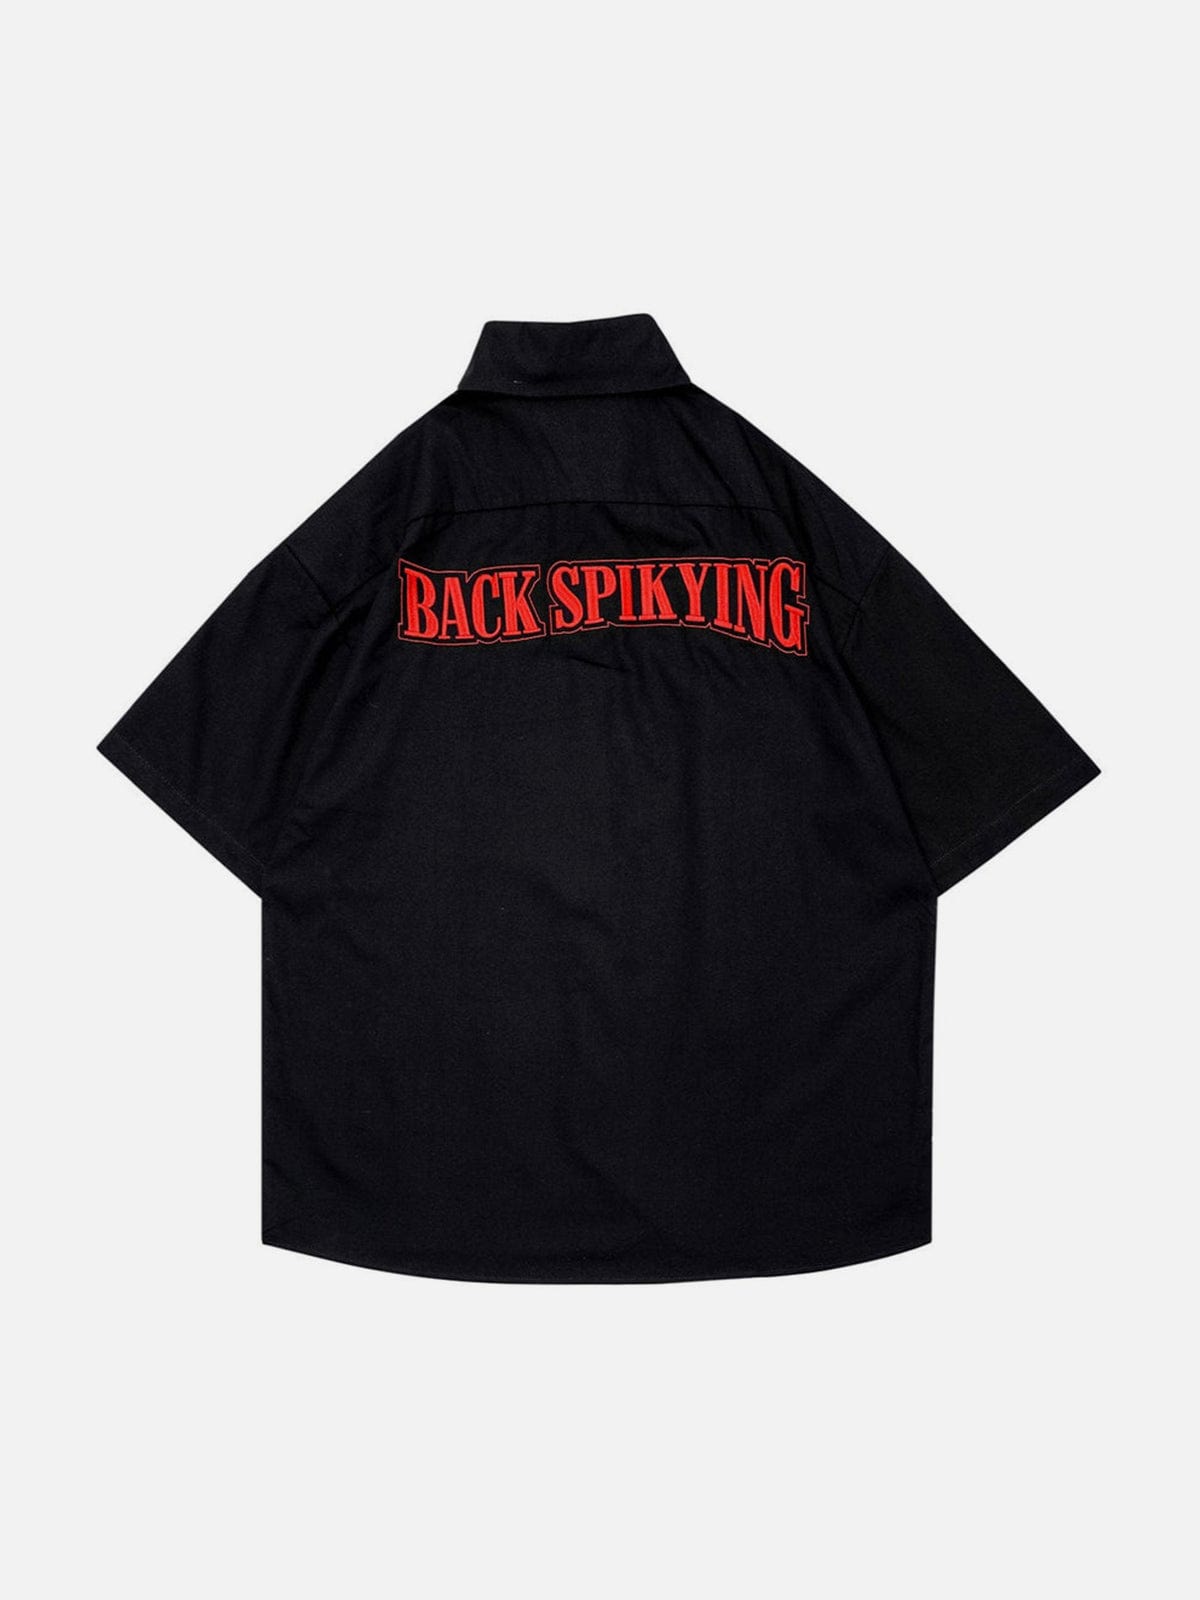 Dark Letters Embroidery Shirt Streetwear Brand Techwear Combat Tactical YUGEN THEORY